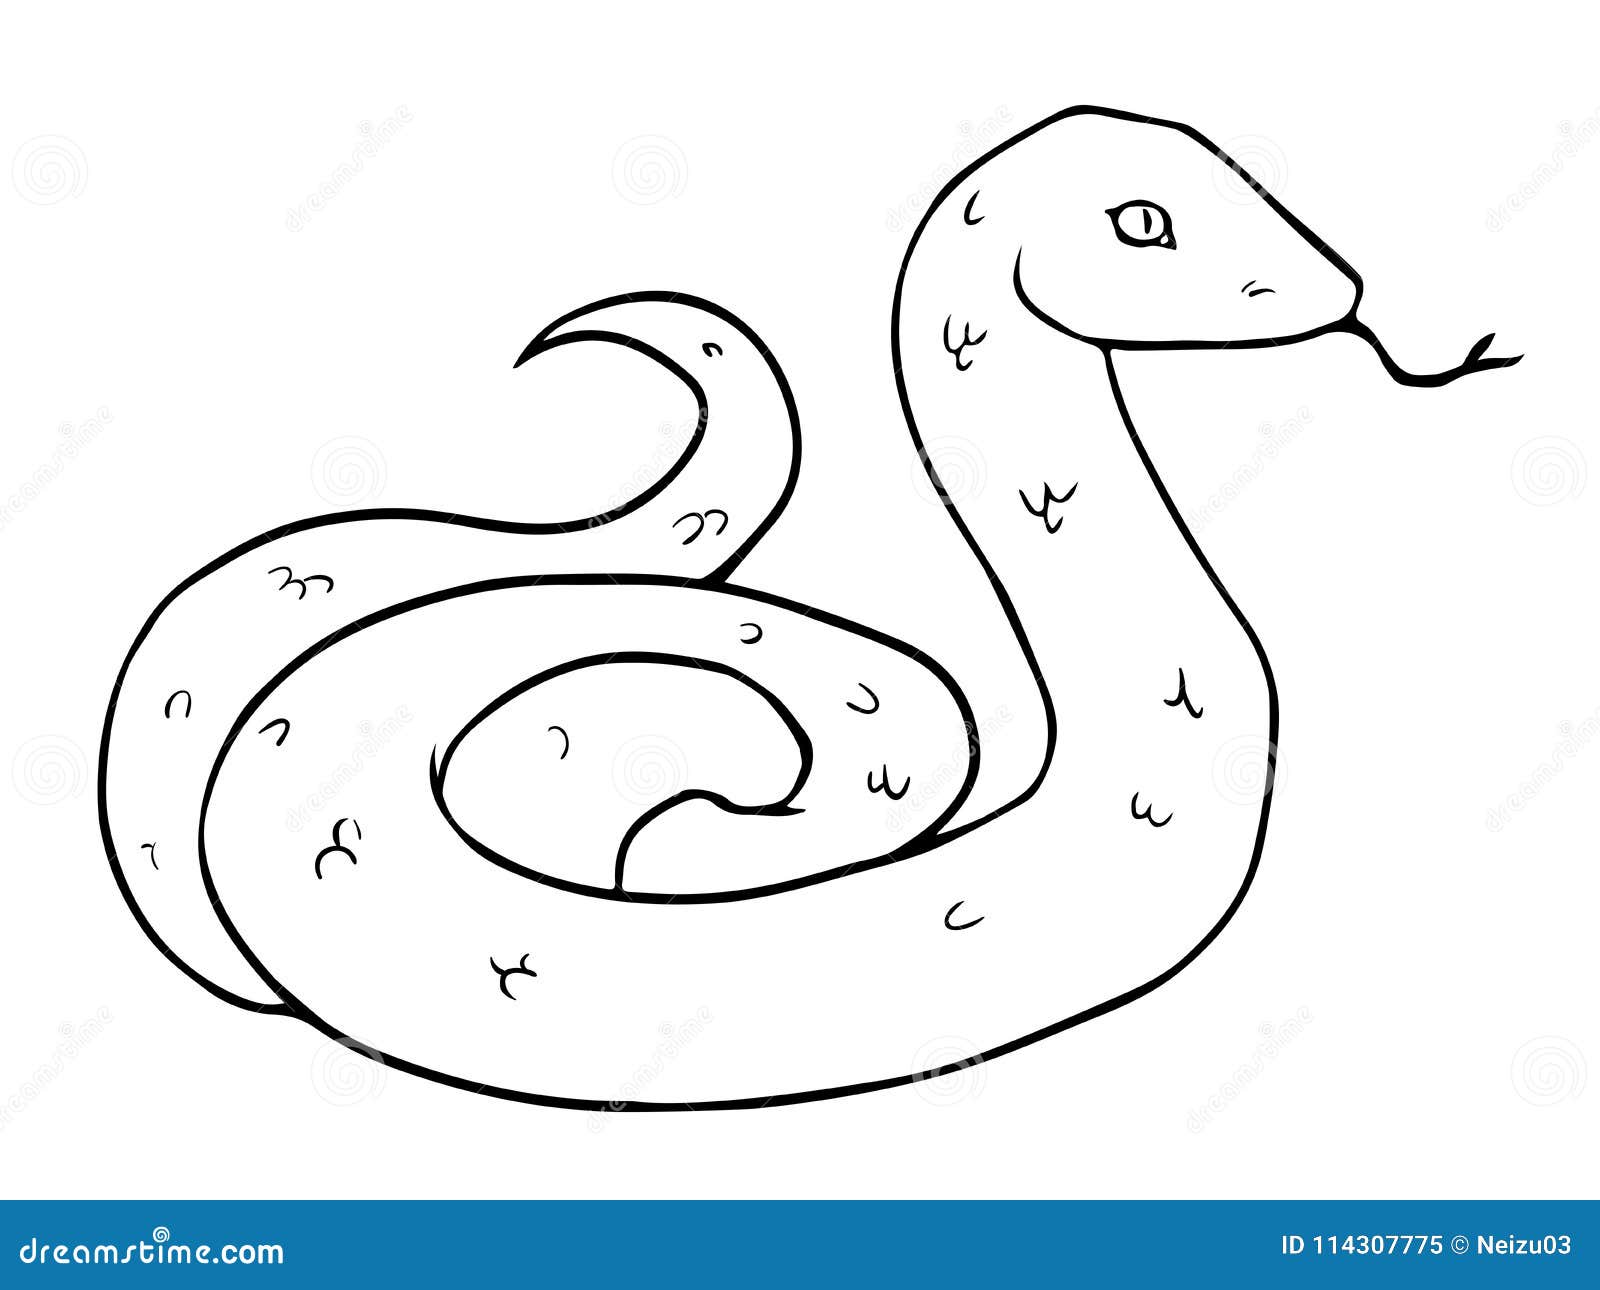 Cartoon Black and White Illustration of Snake Stock Illustration -  Illustration of drawing, snake: 114307775